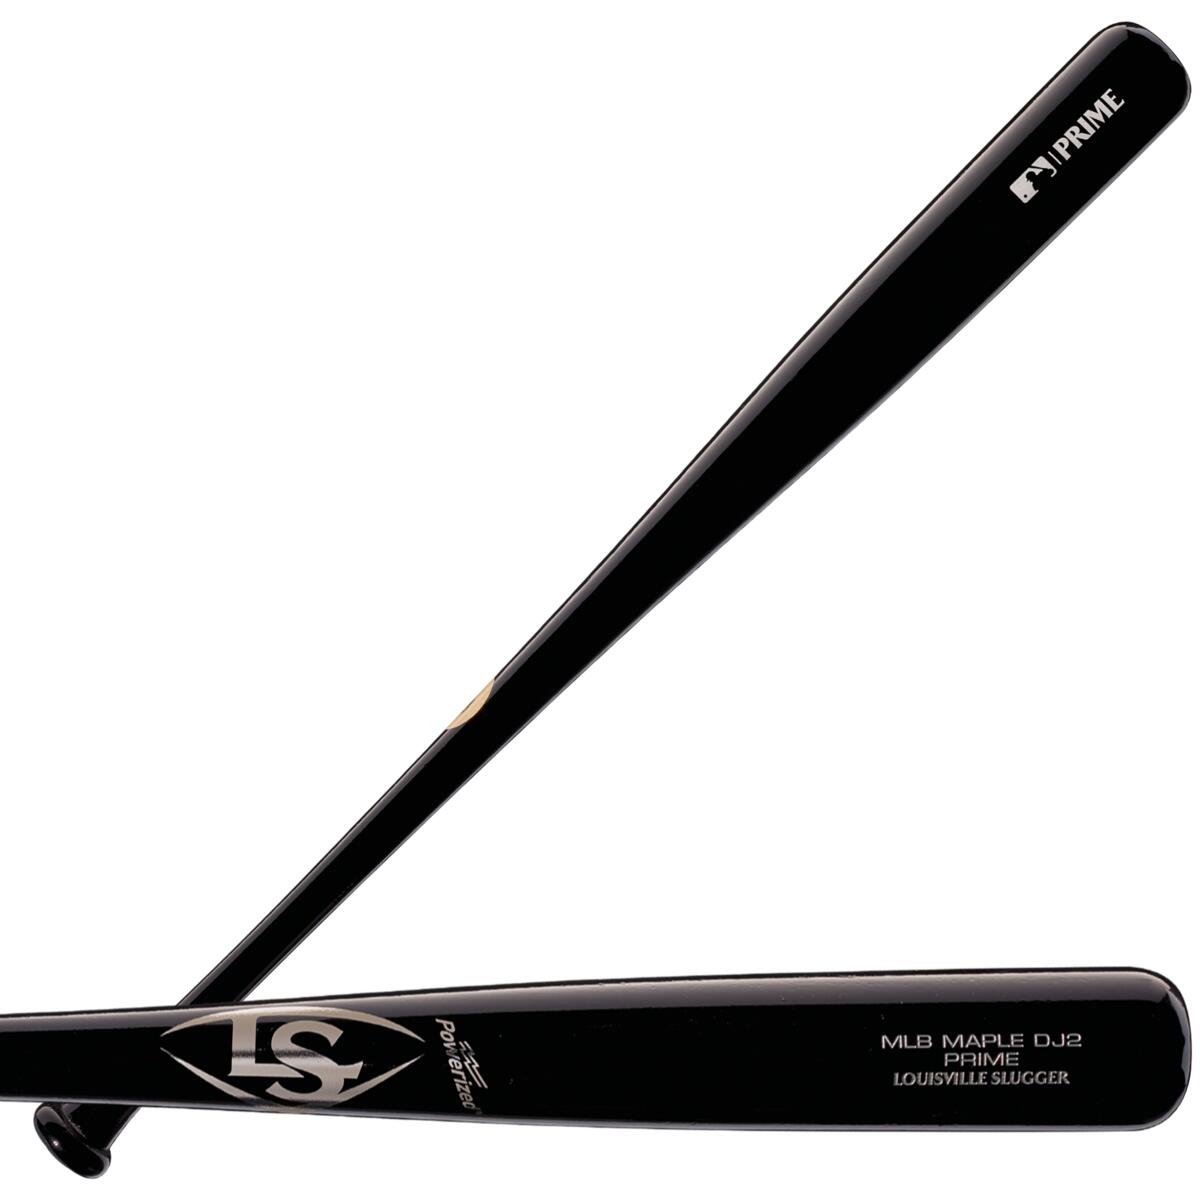 Louisville Slugger MLB Prime Maple DJ2 Captain Wood Baseball Bat 